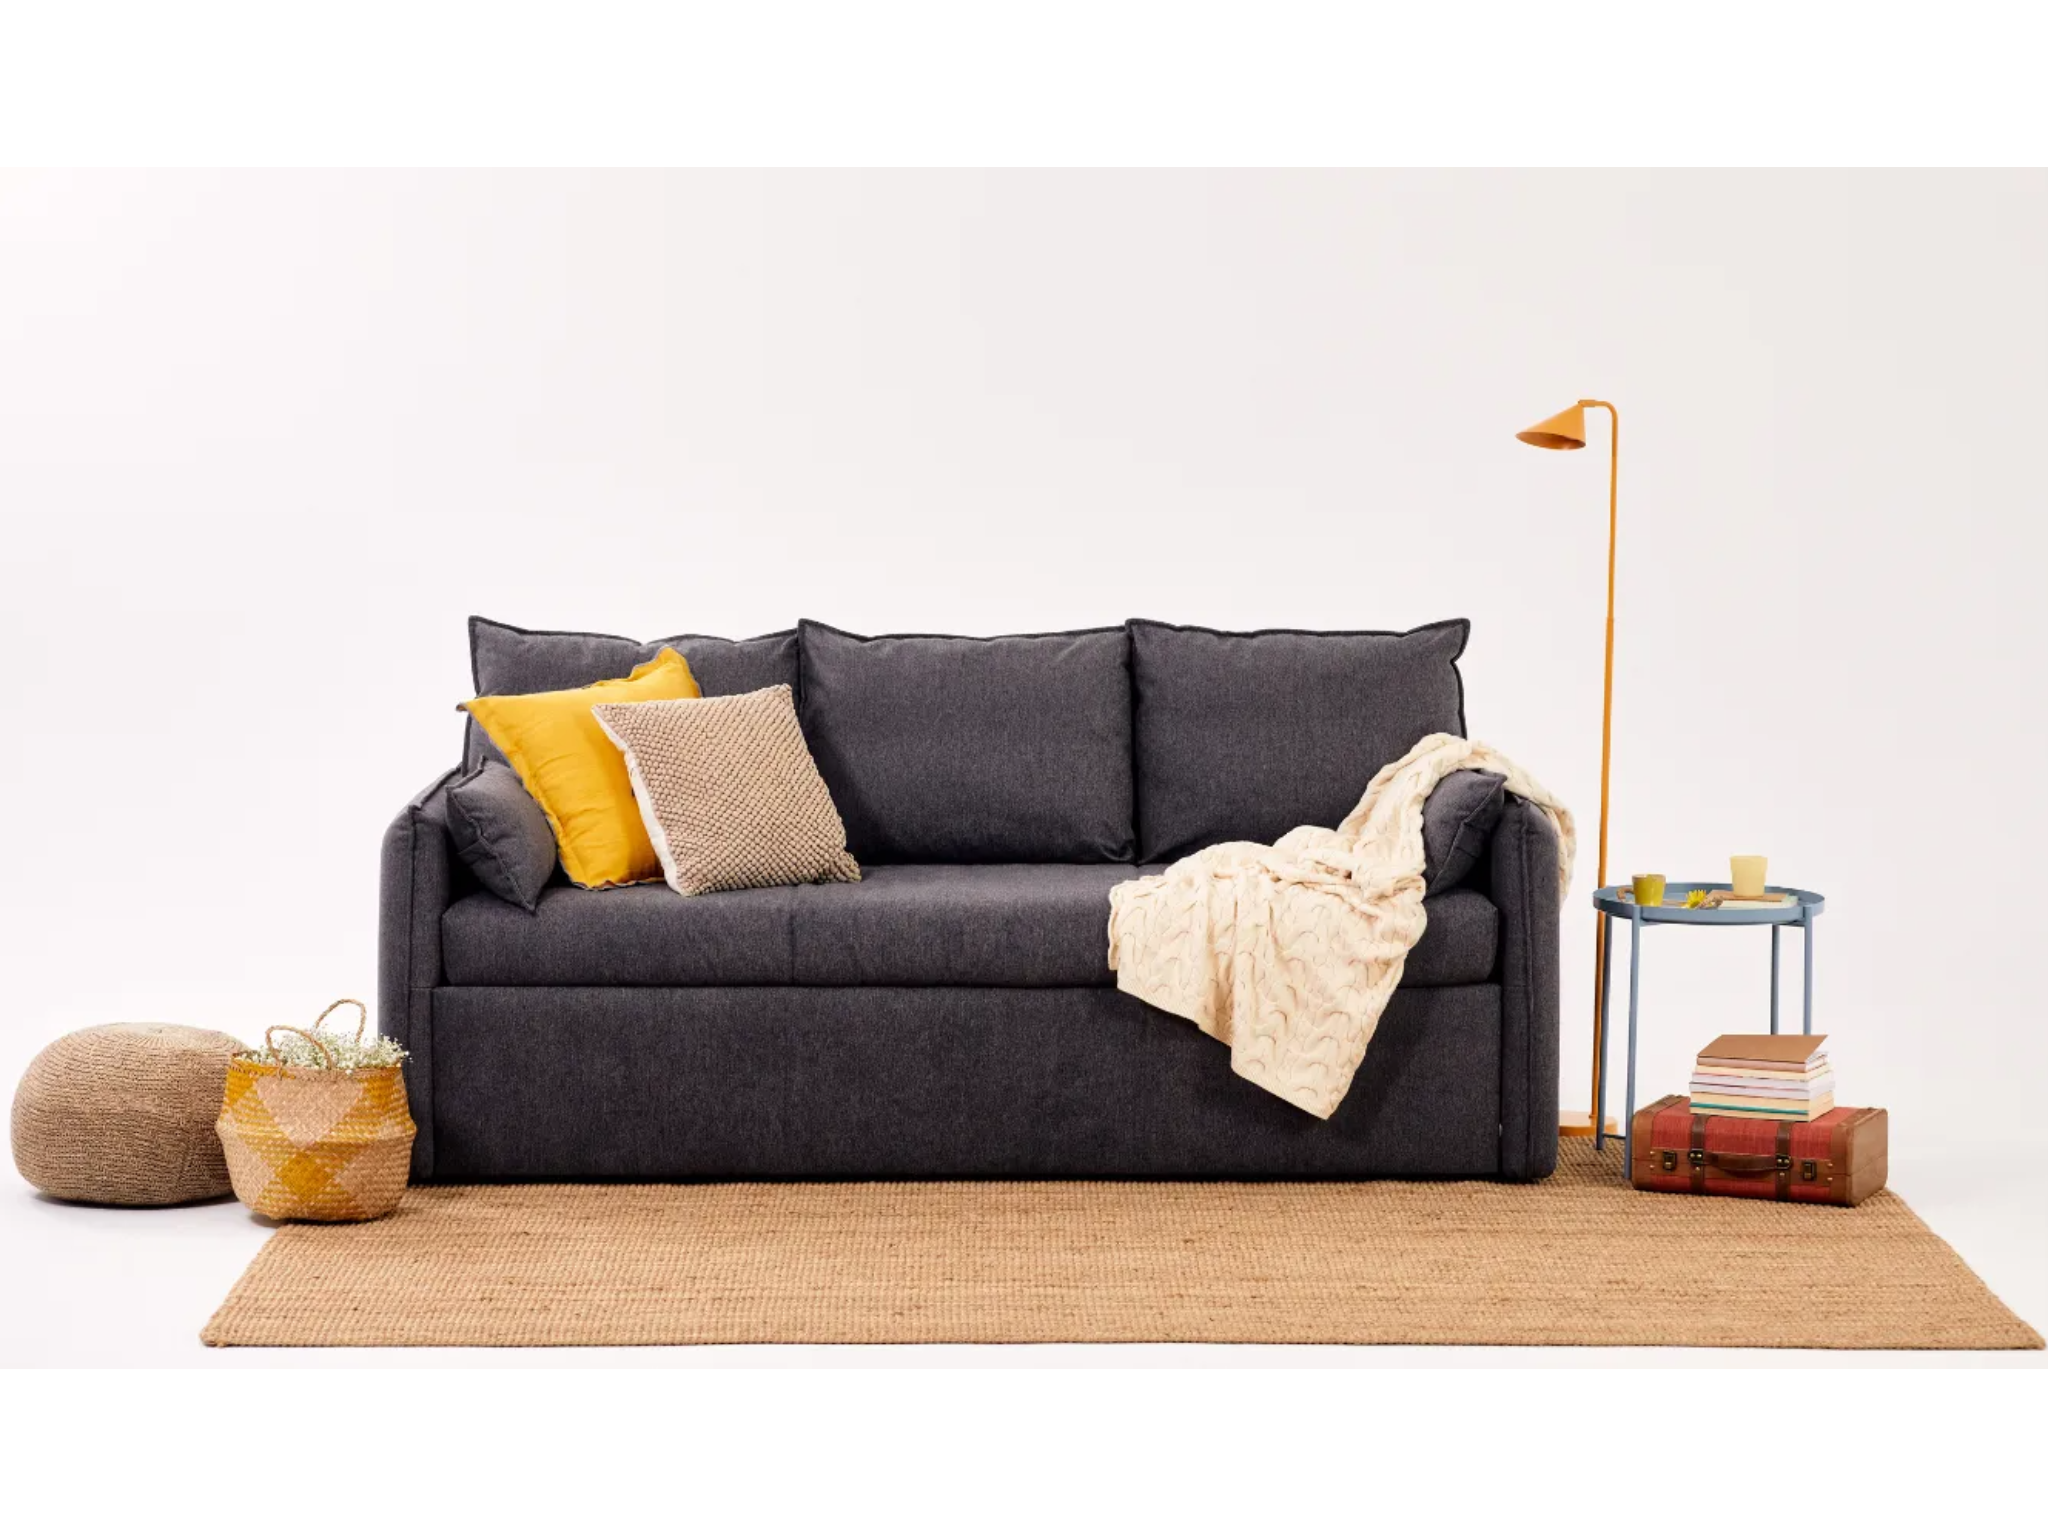 emma-sofa-bed-indybest (1).png